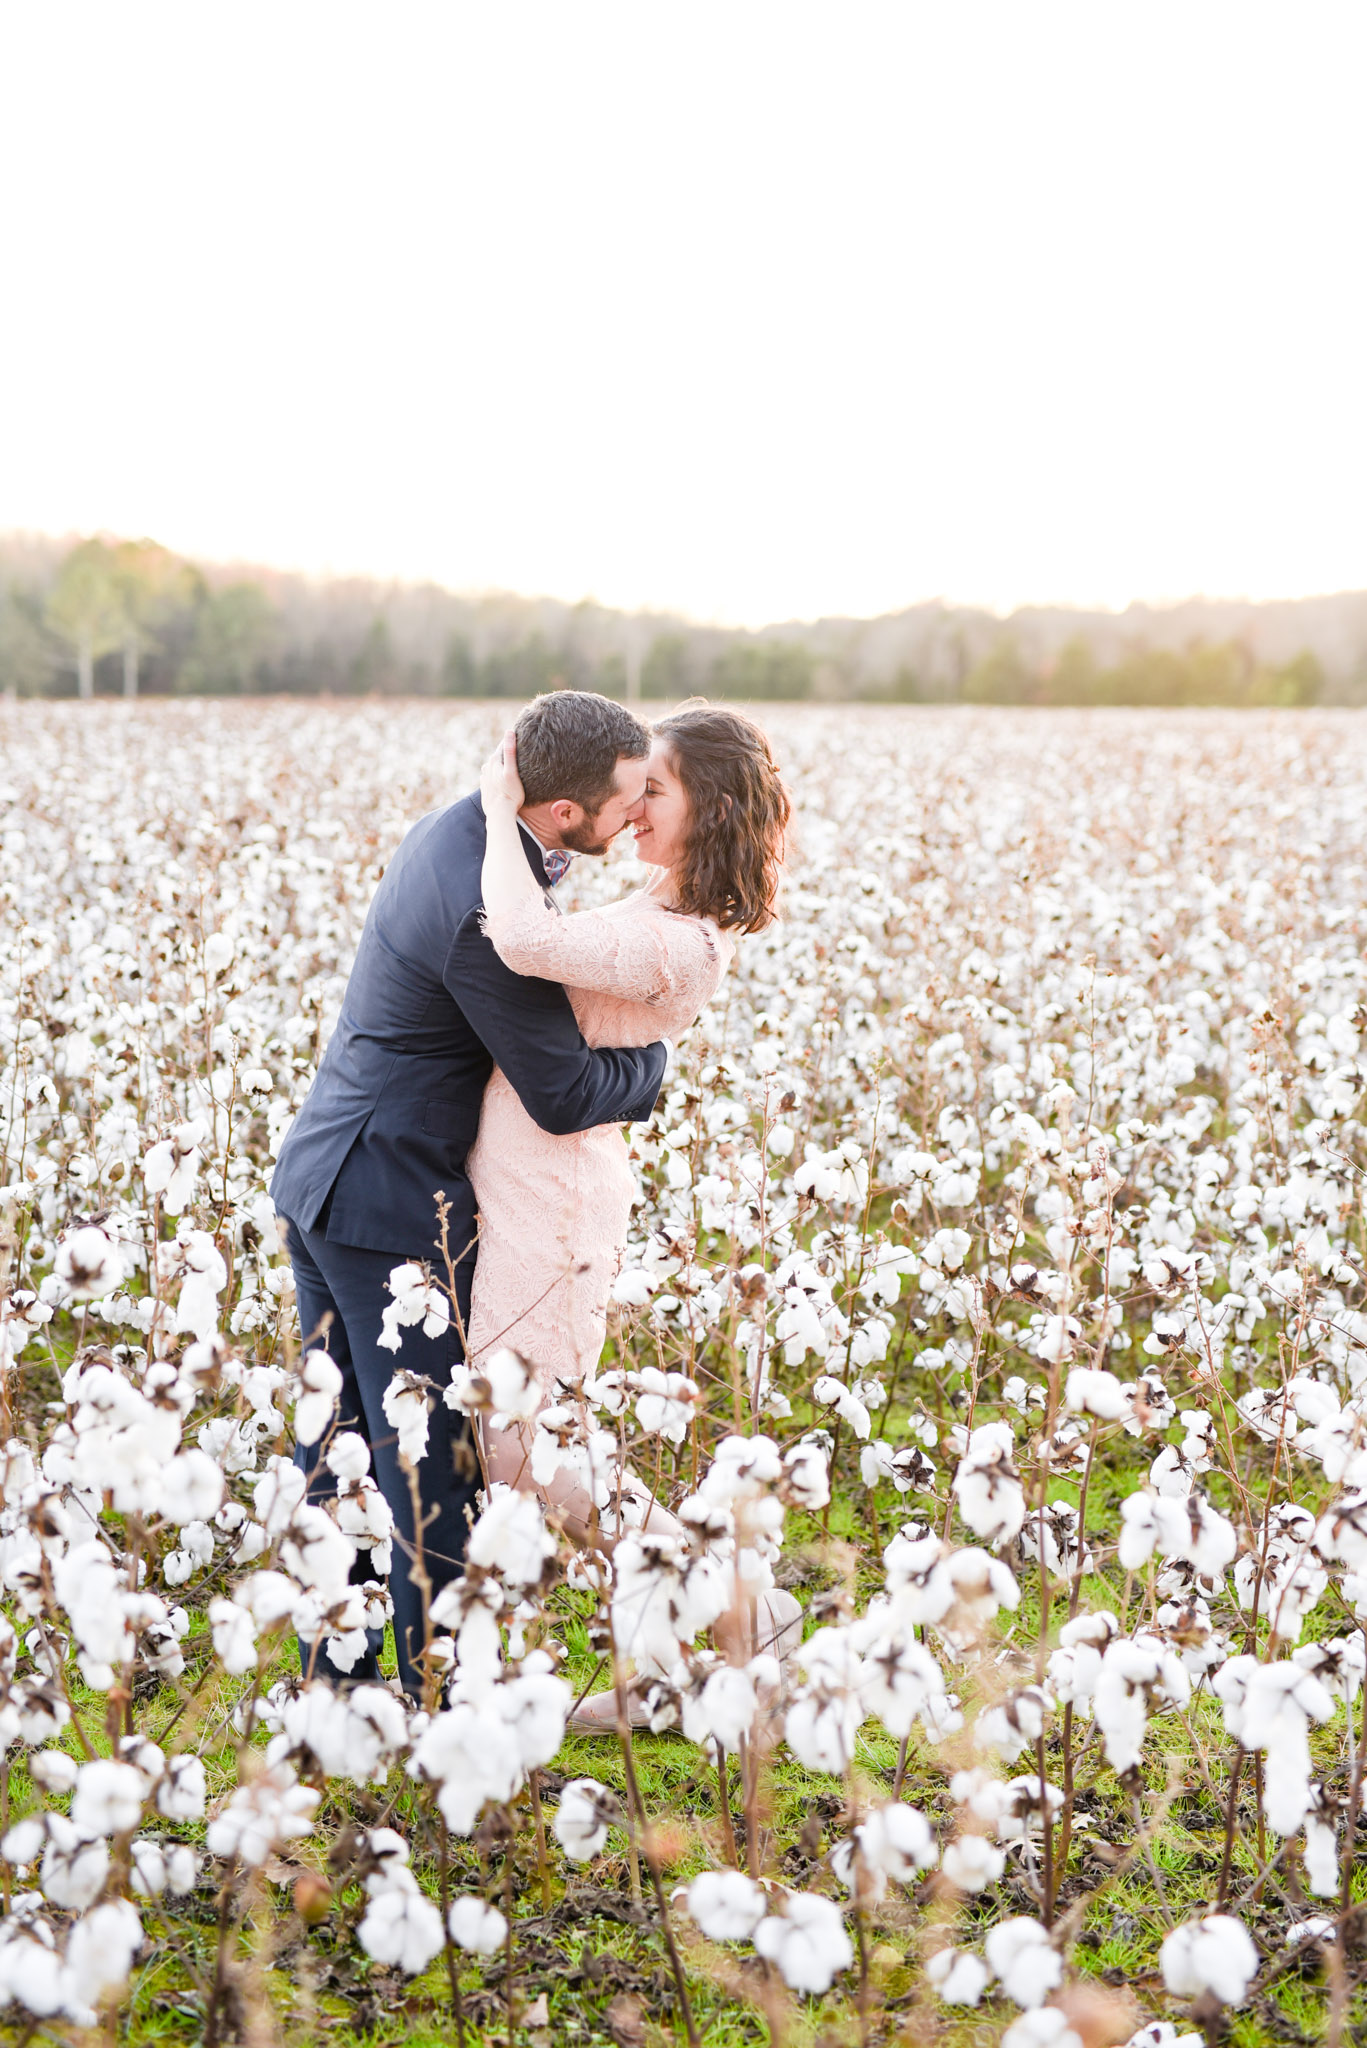 Cotton field engagement photo inspiration. // mysweetengagement.com